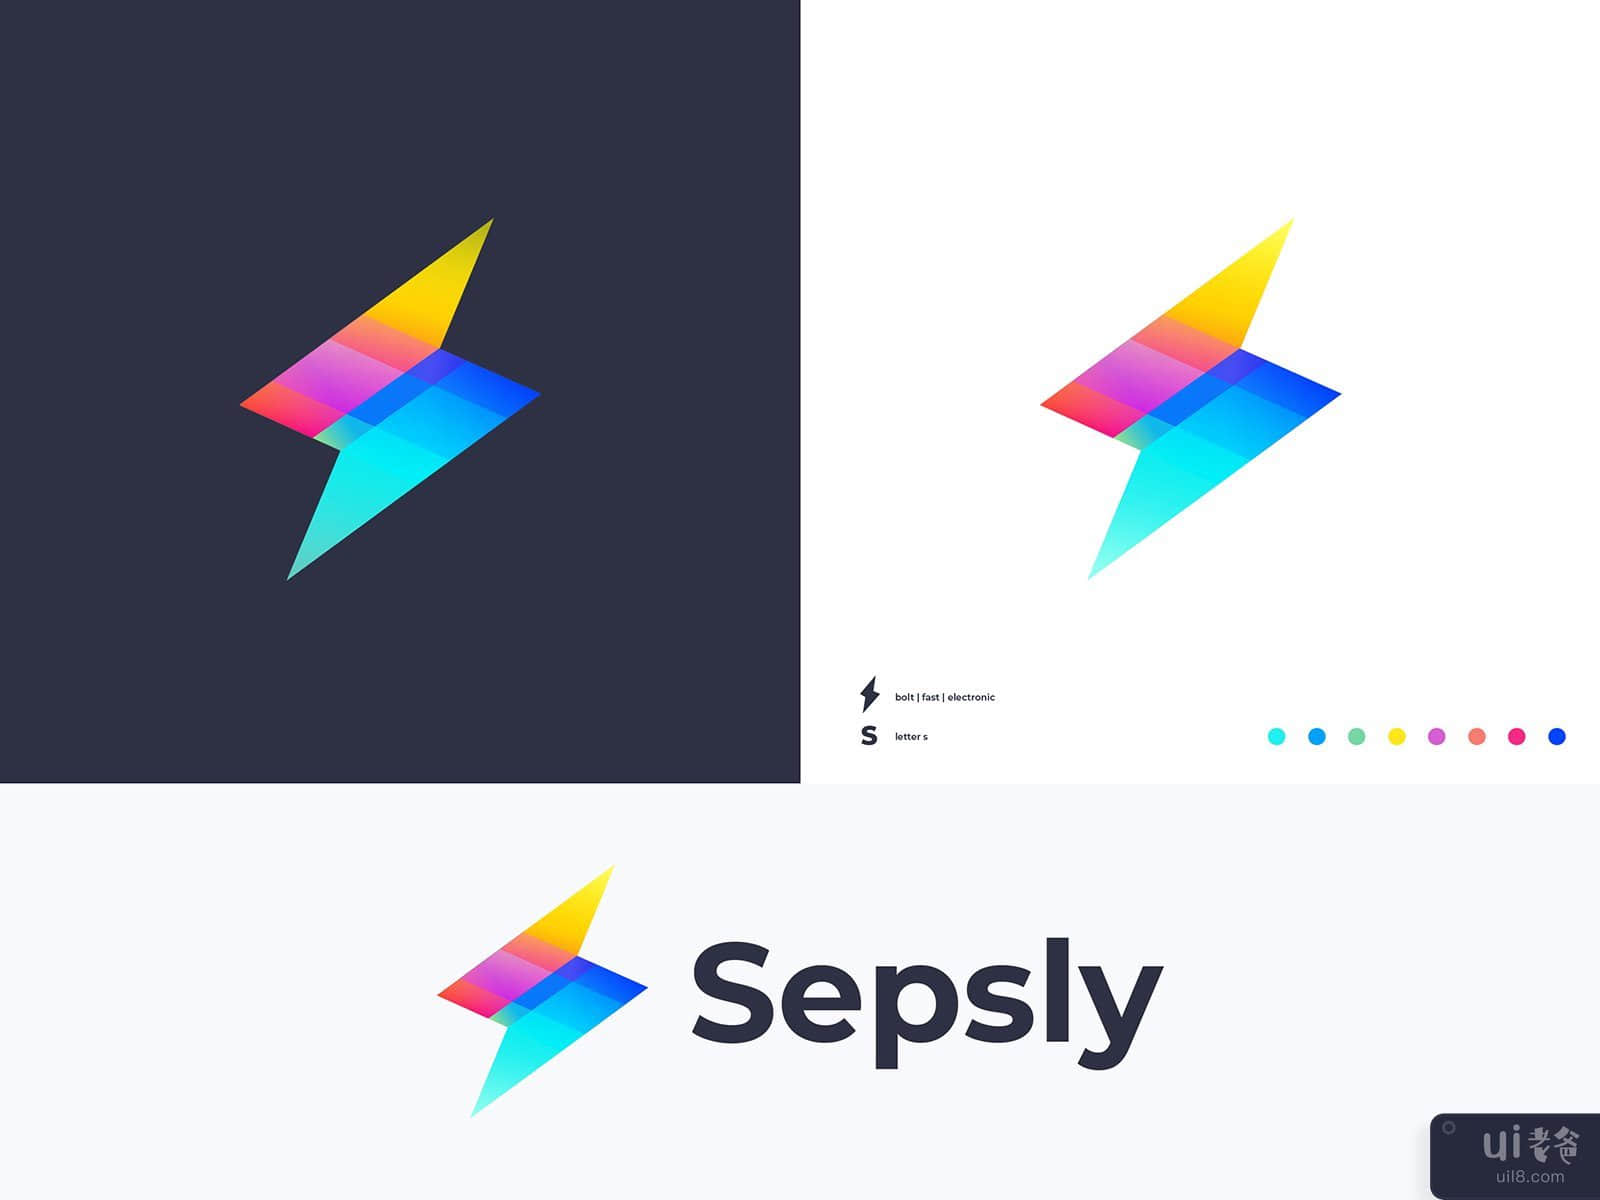 Sepsly - Bolt + S logo concept